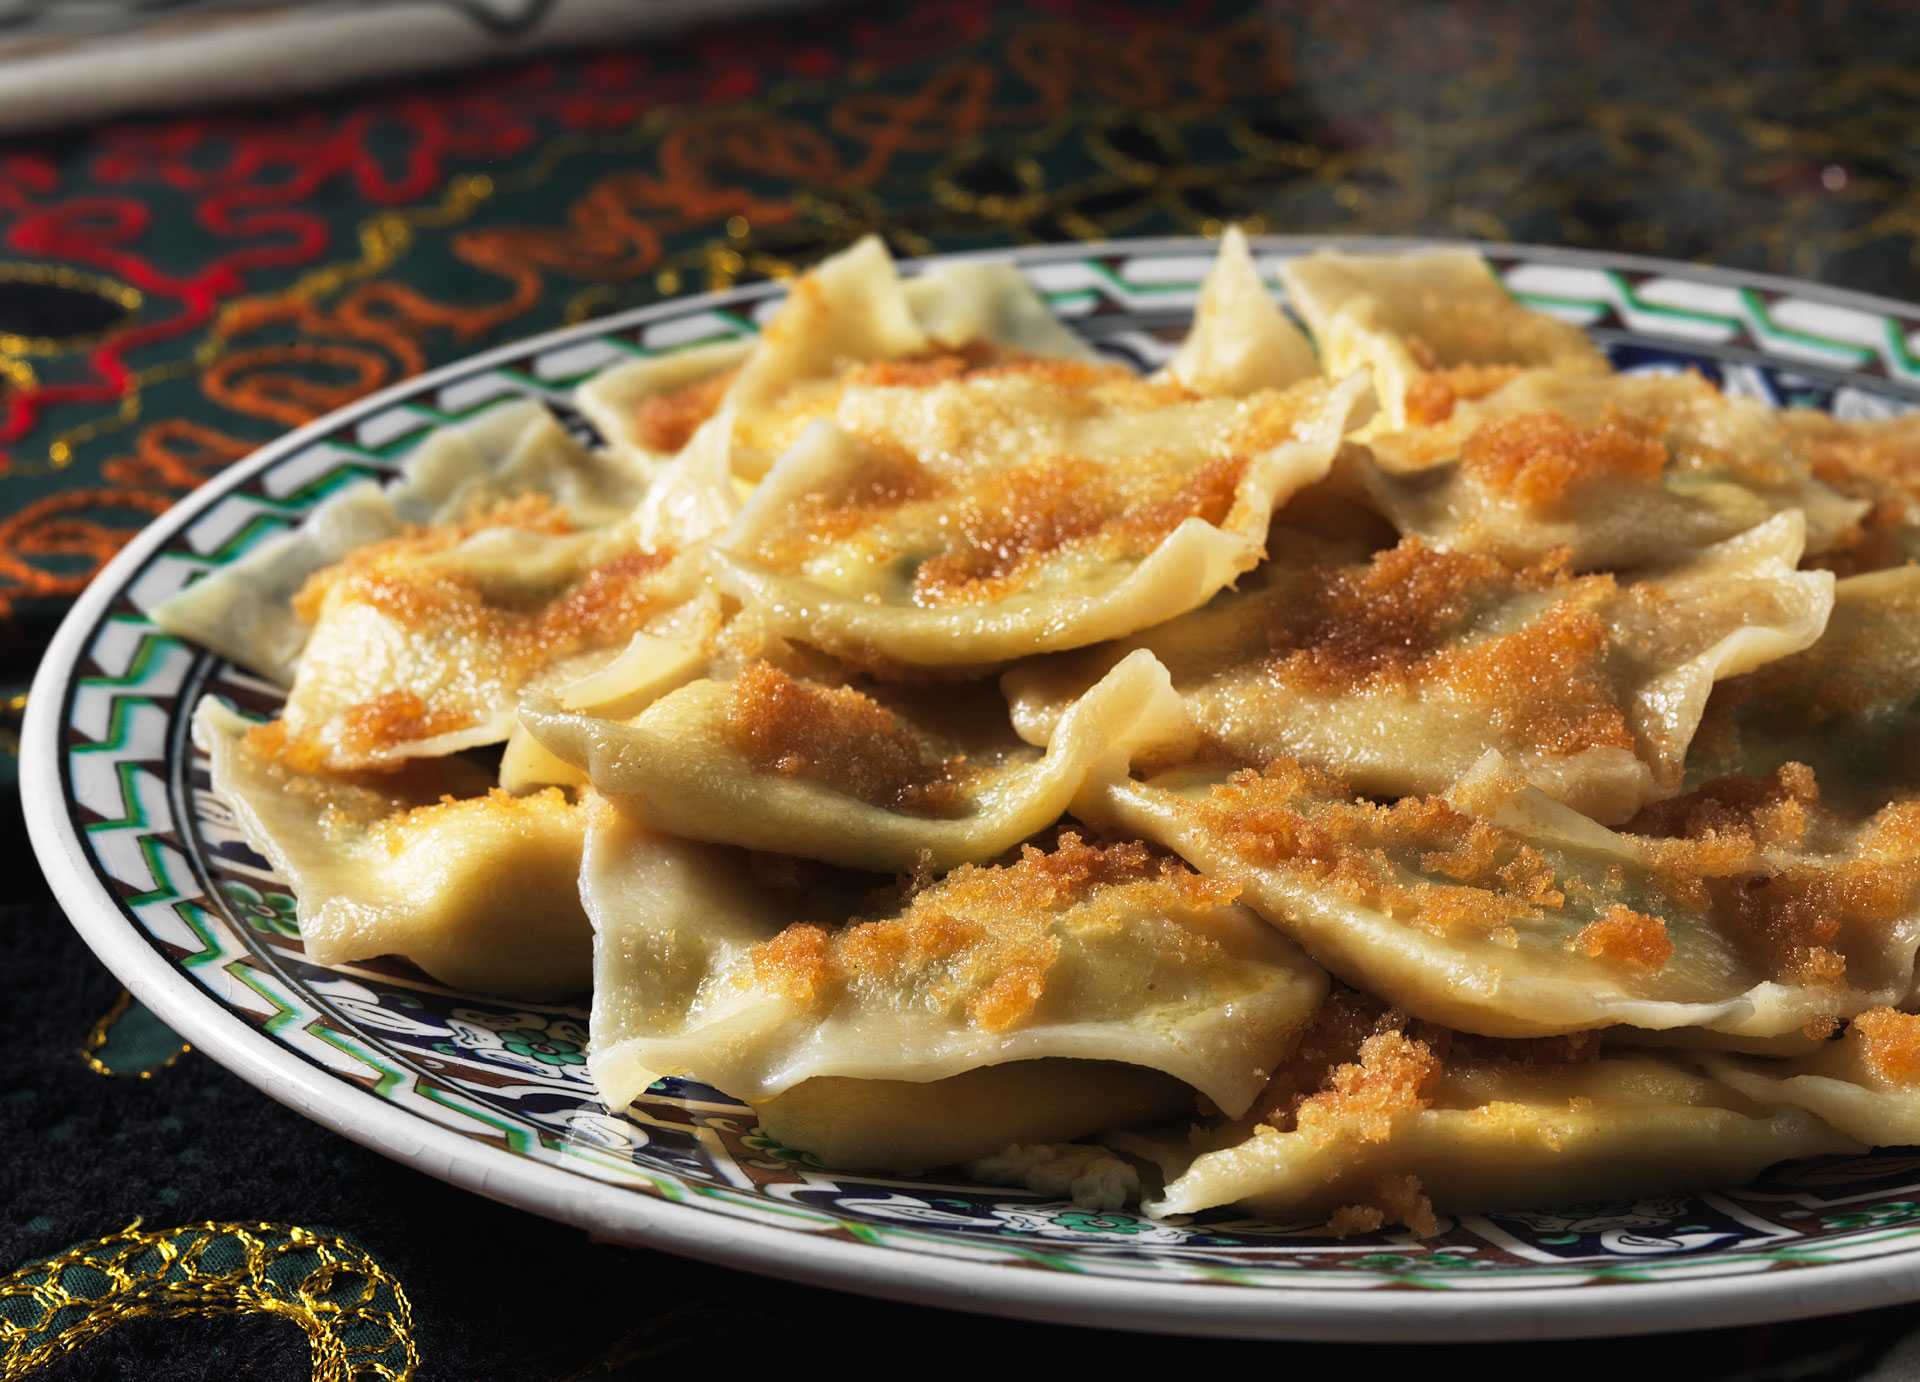 Таджикская кухня рецепты с фото